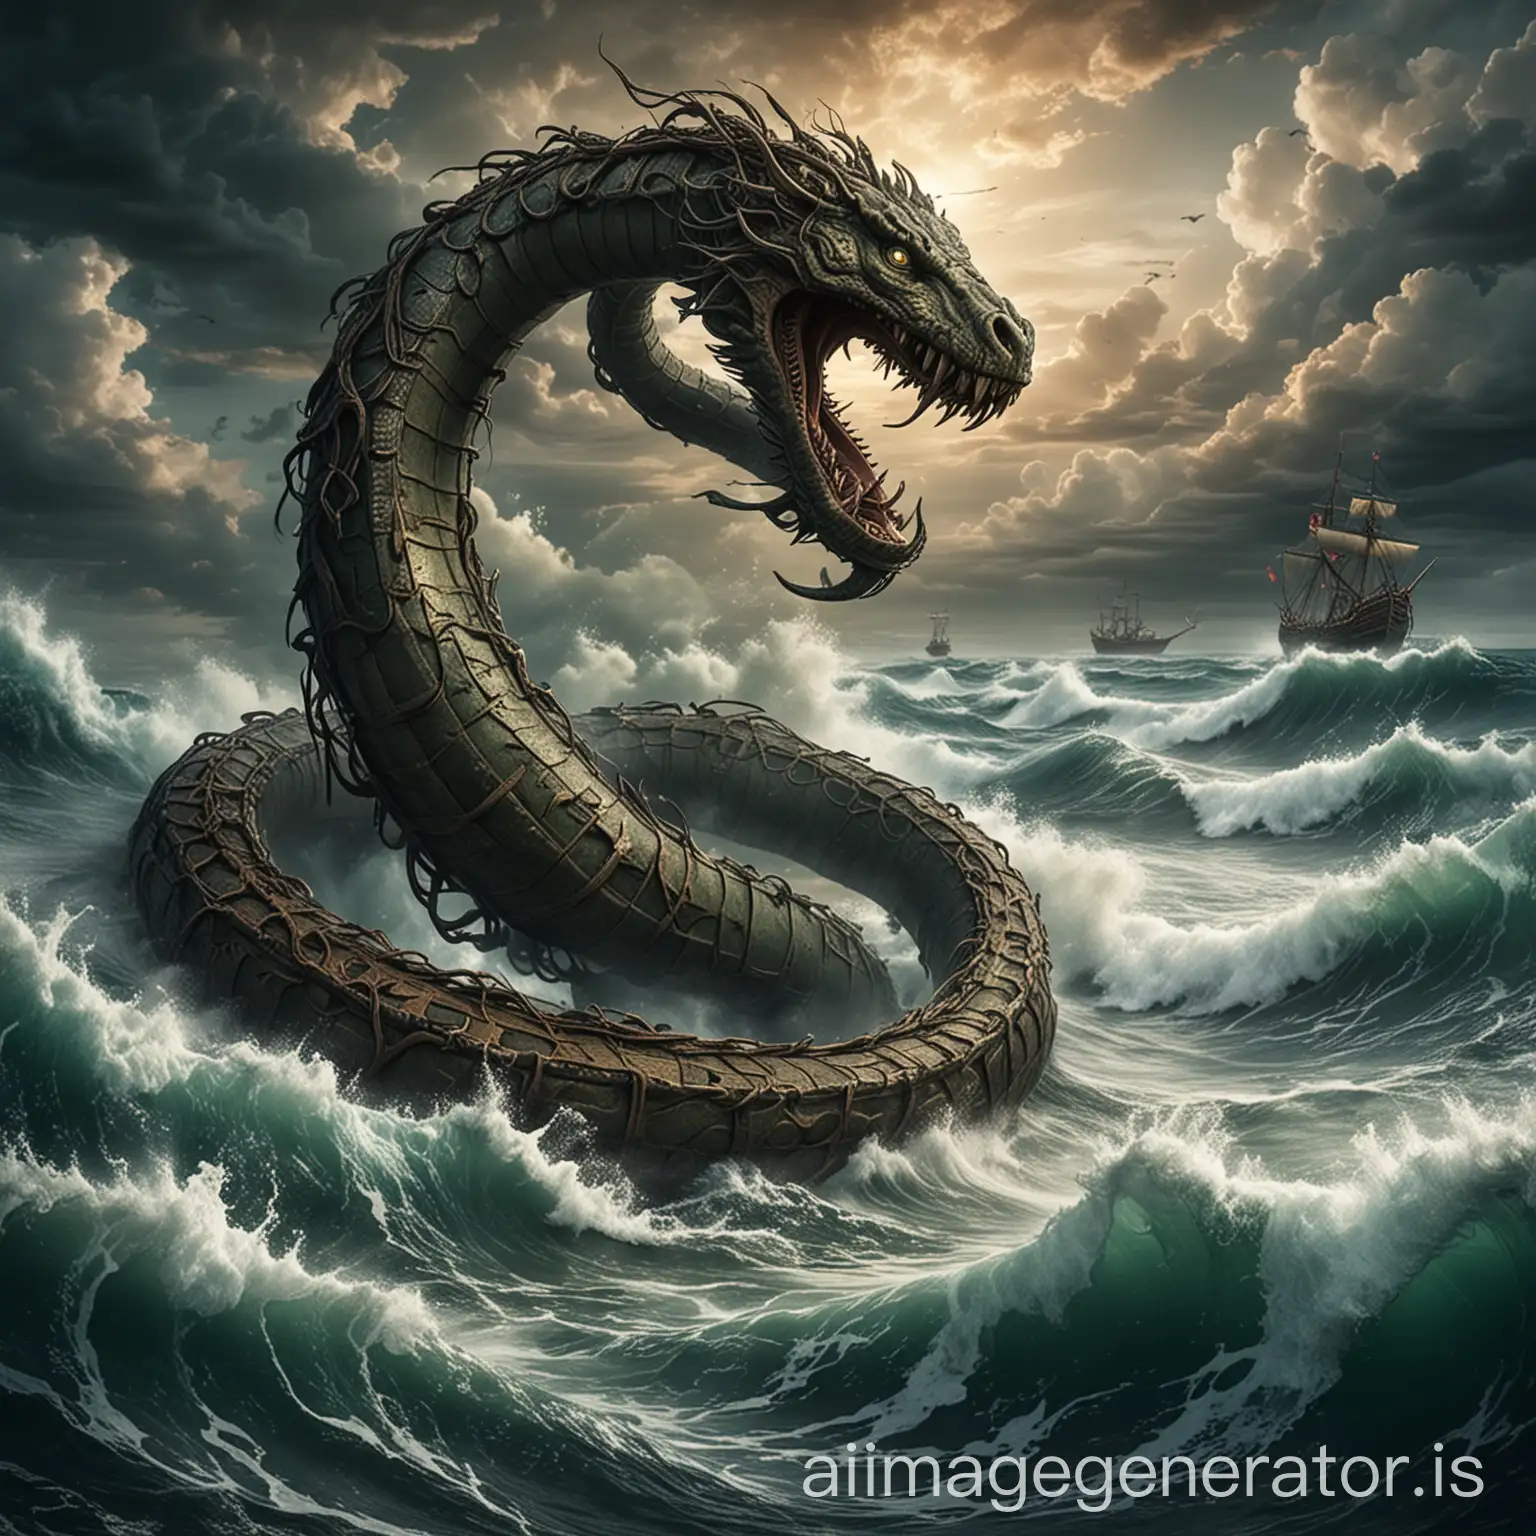 Midgard Serpent making earthquakes in the ocean